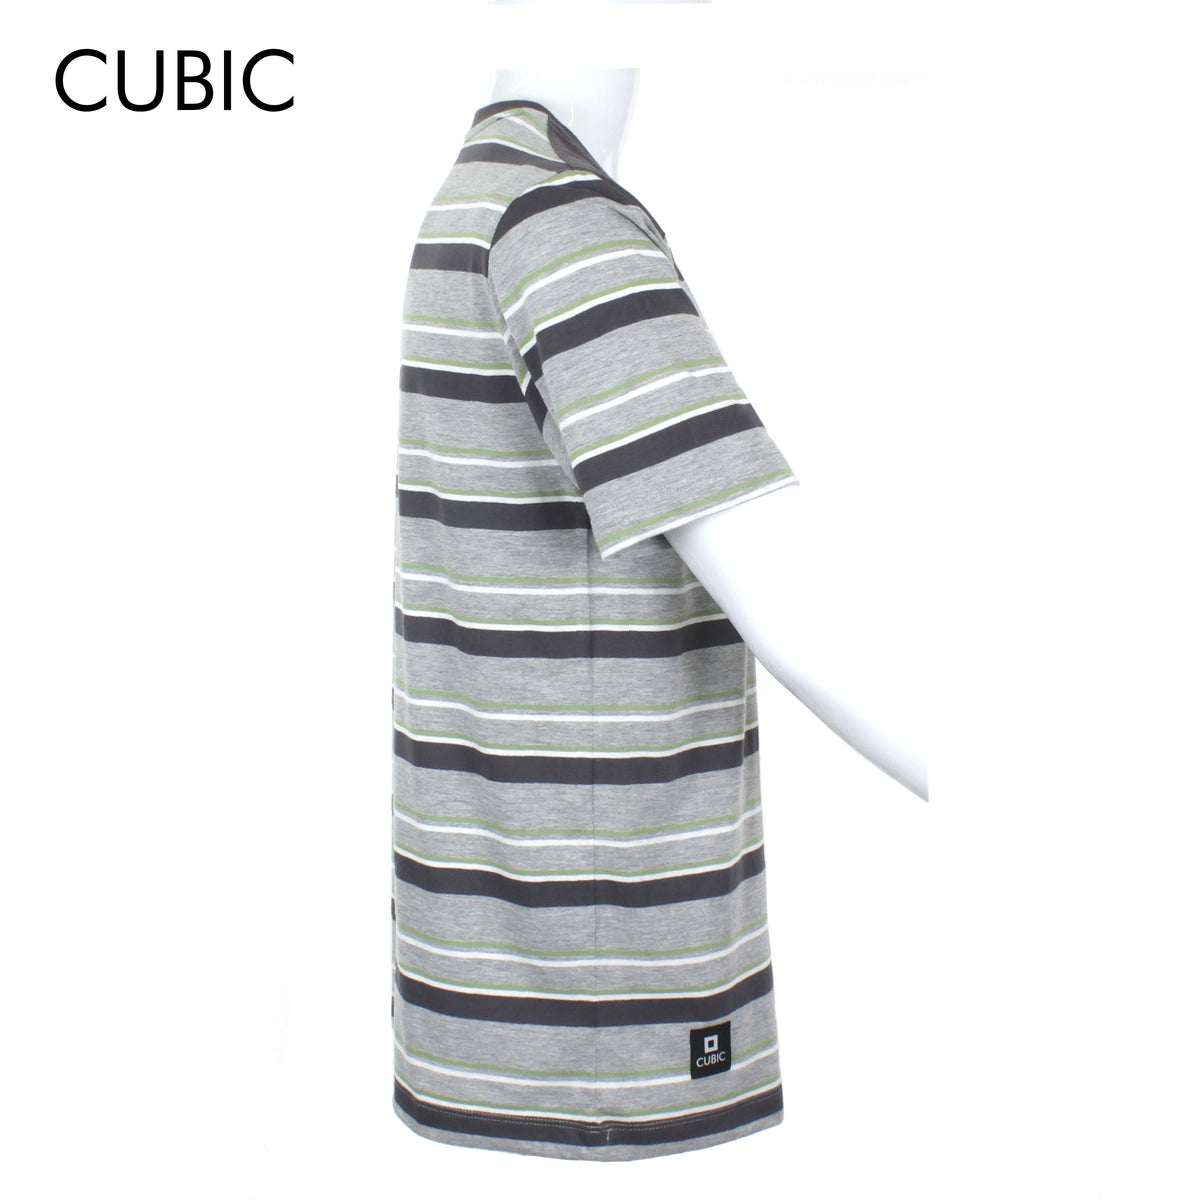 Cubic Mens Round Neck Tees T-Shirt Stripes Shirt Top Top for Men - CMS2357R